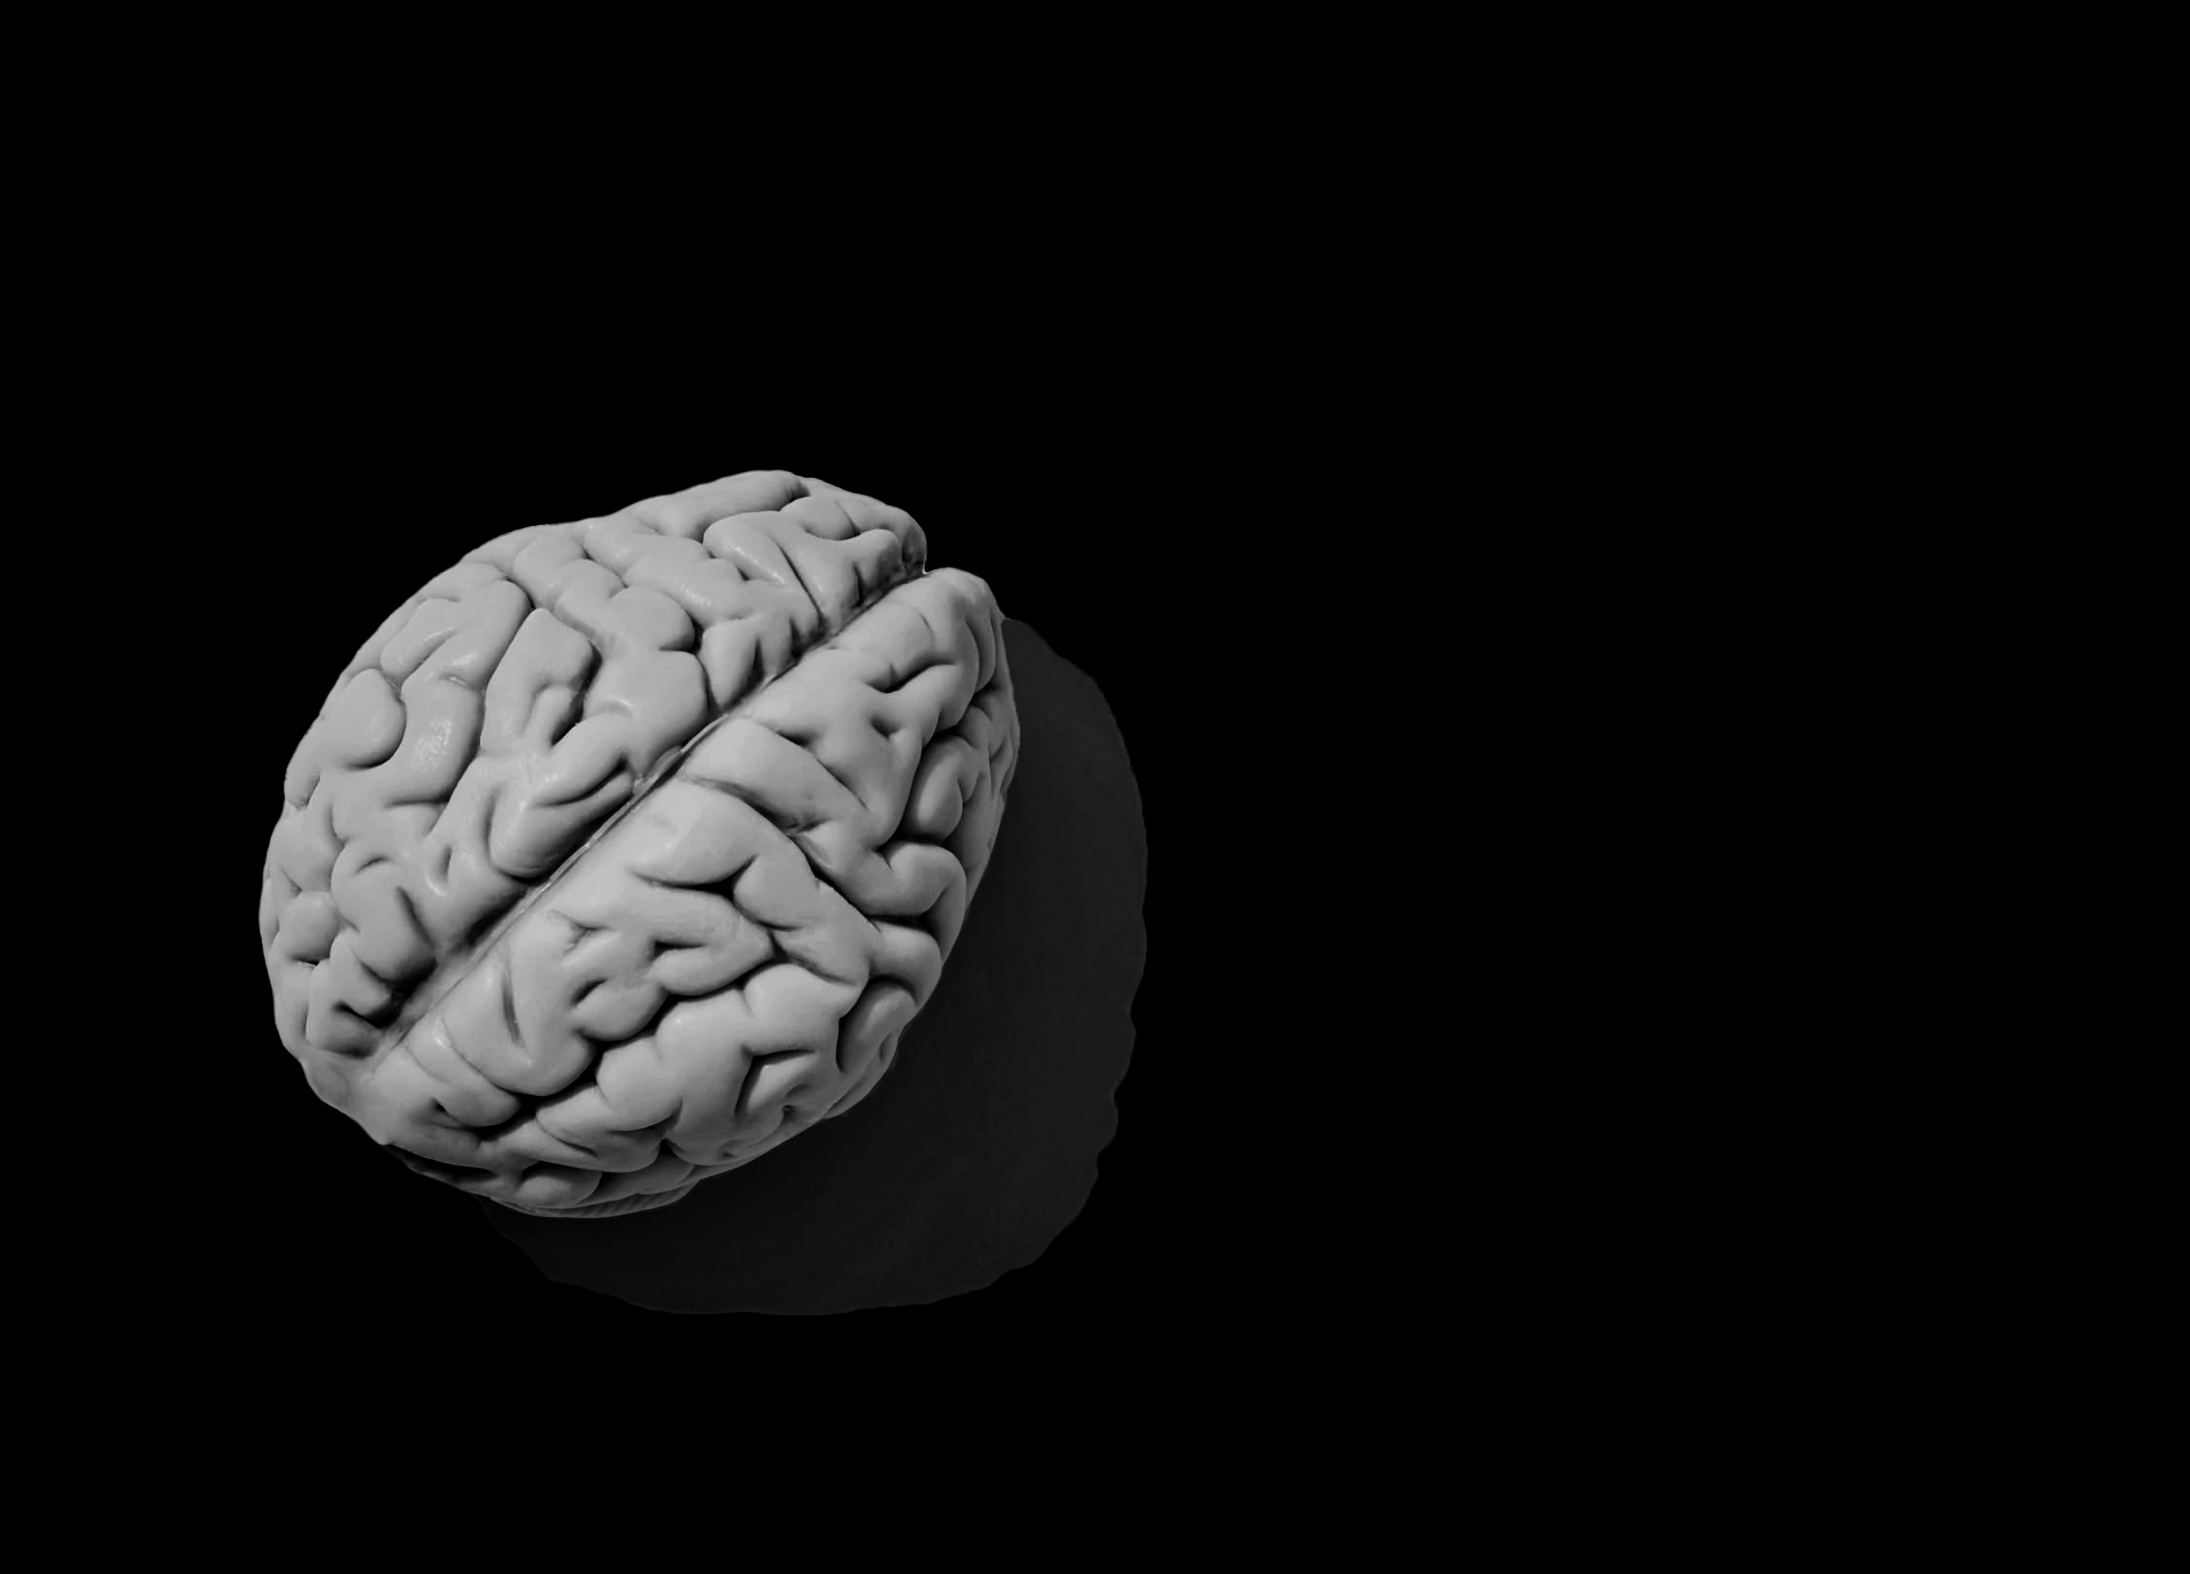 Black and white bird's eye view of the human brain.